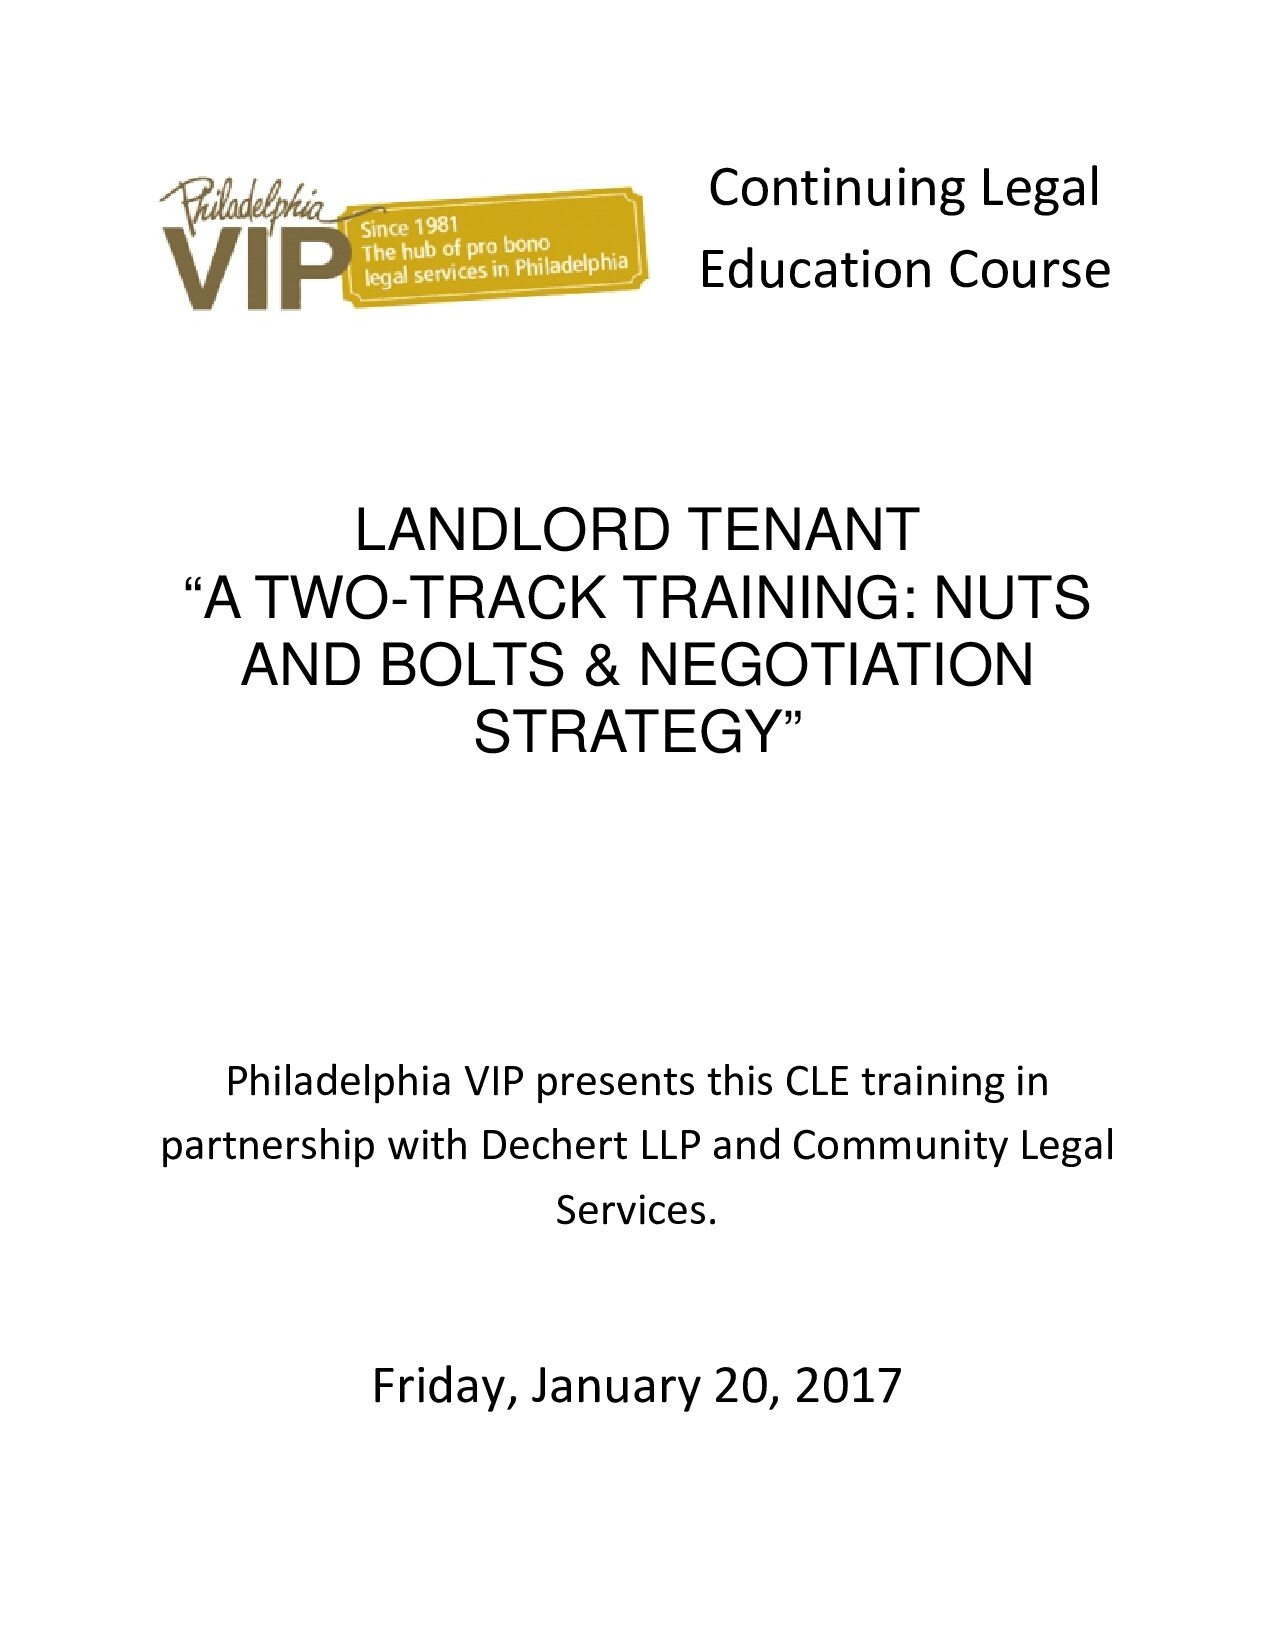 2017 Landlord Tenant Training Manual The 2017 Landlord Tenant Training Manual 2017